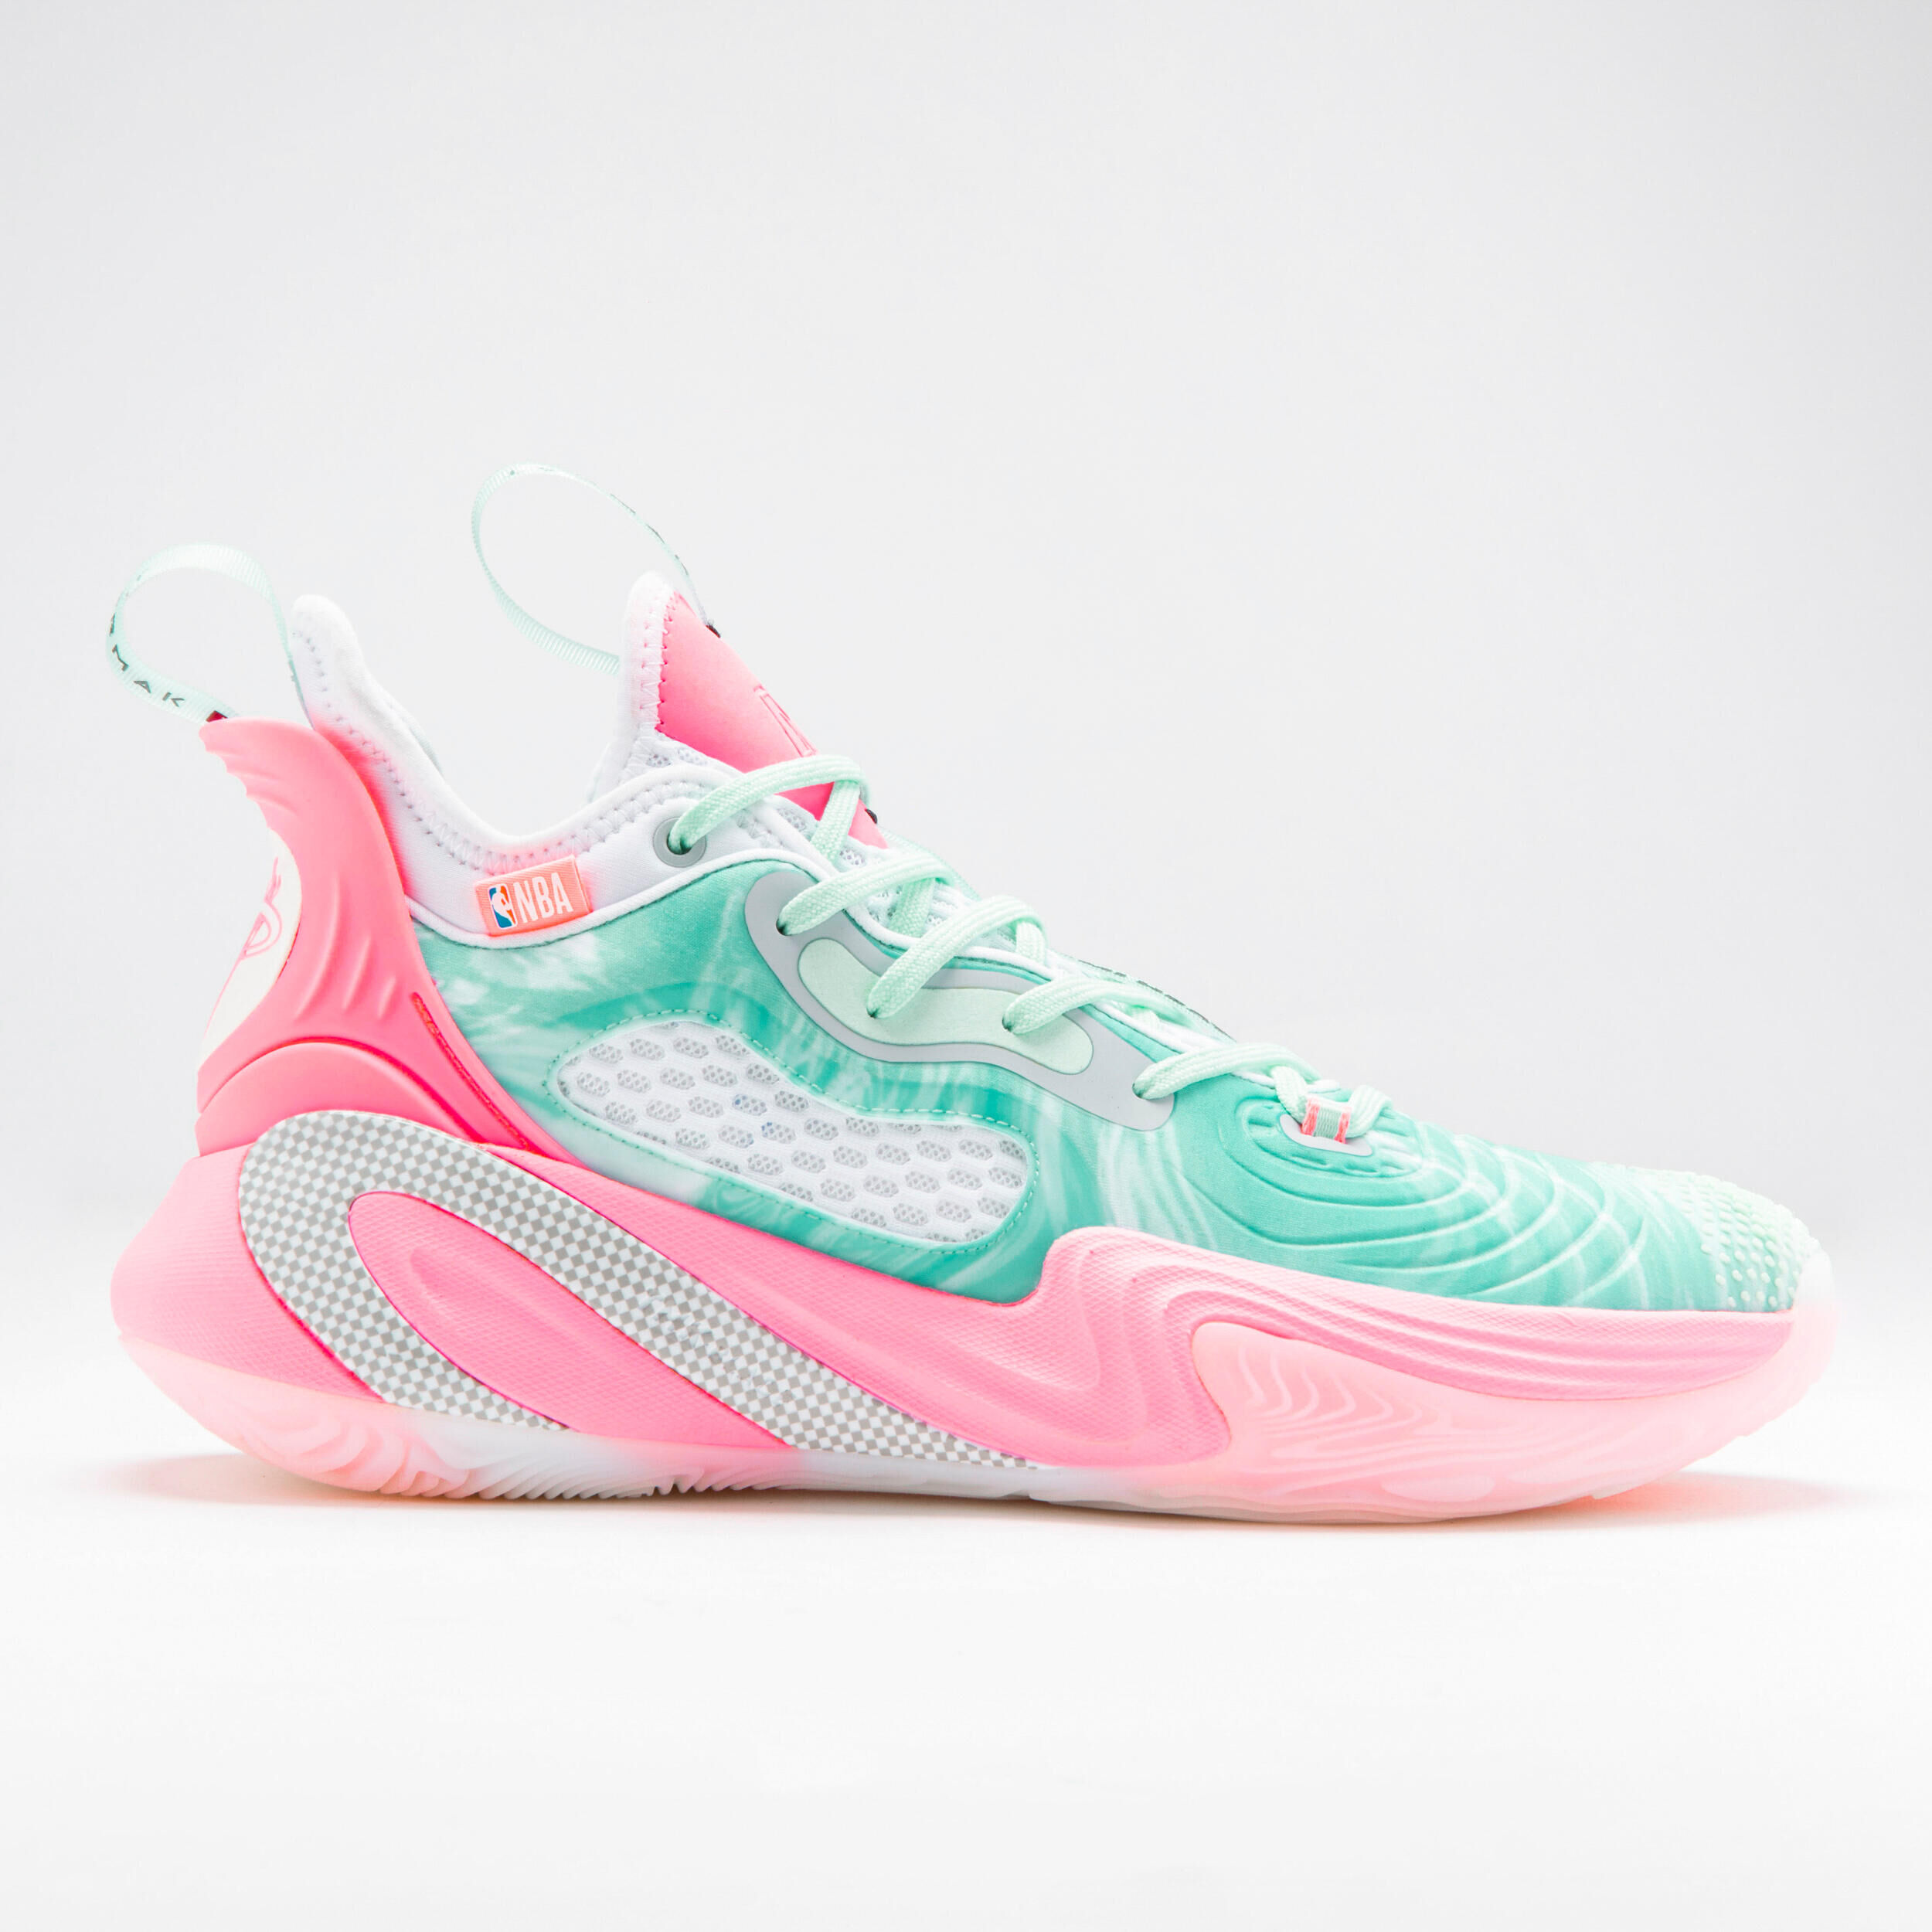 TARMAK Men's/Women's Basketball Shoes SE900 - NBA Miami Heat/Green/Pink